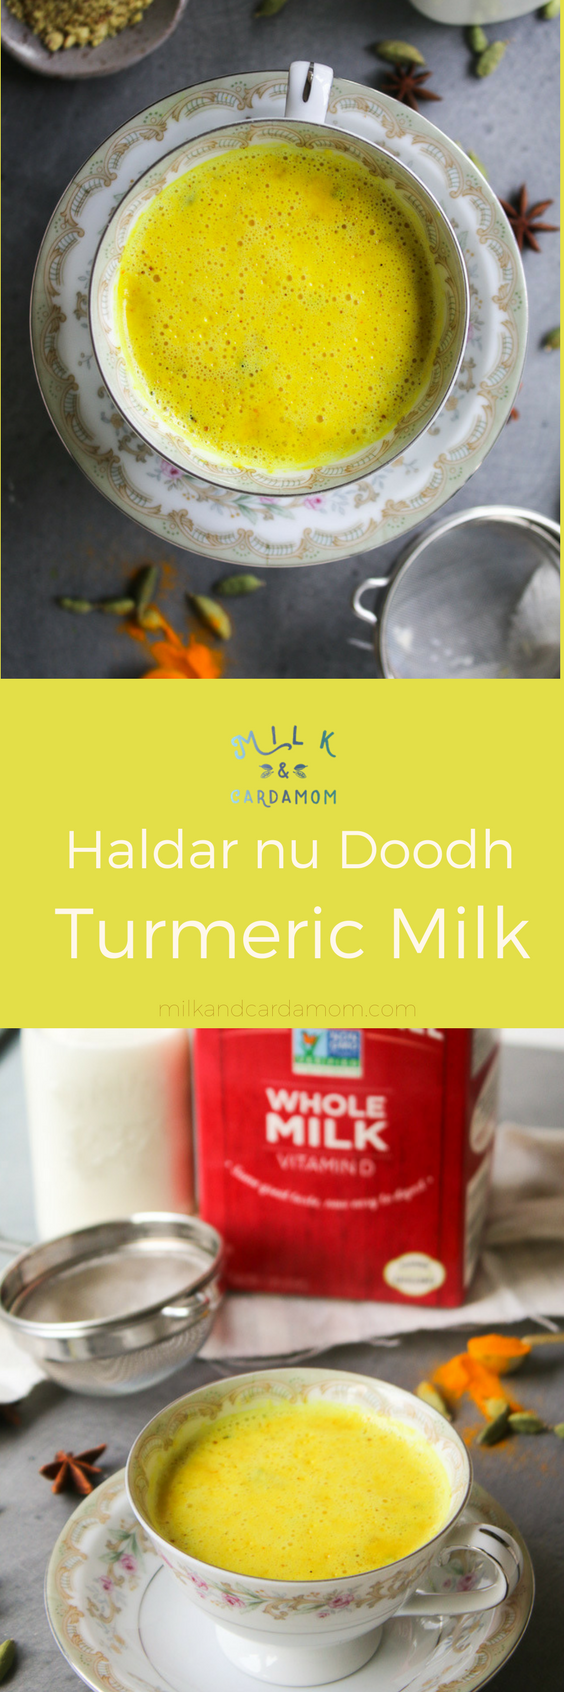 turmeric milk, golden milk, turmeric recipe, golden milk recipe, recipe, drink, turmeric, thandai